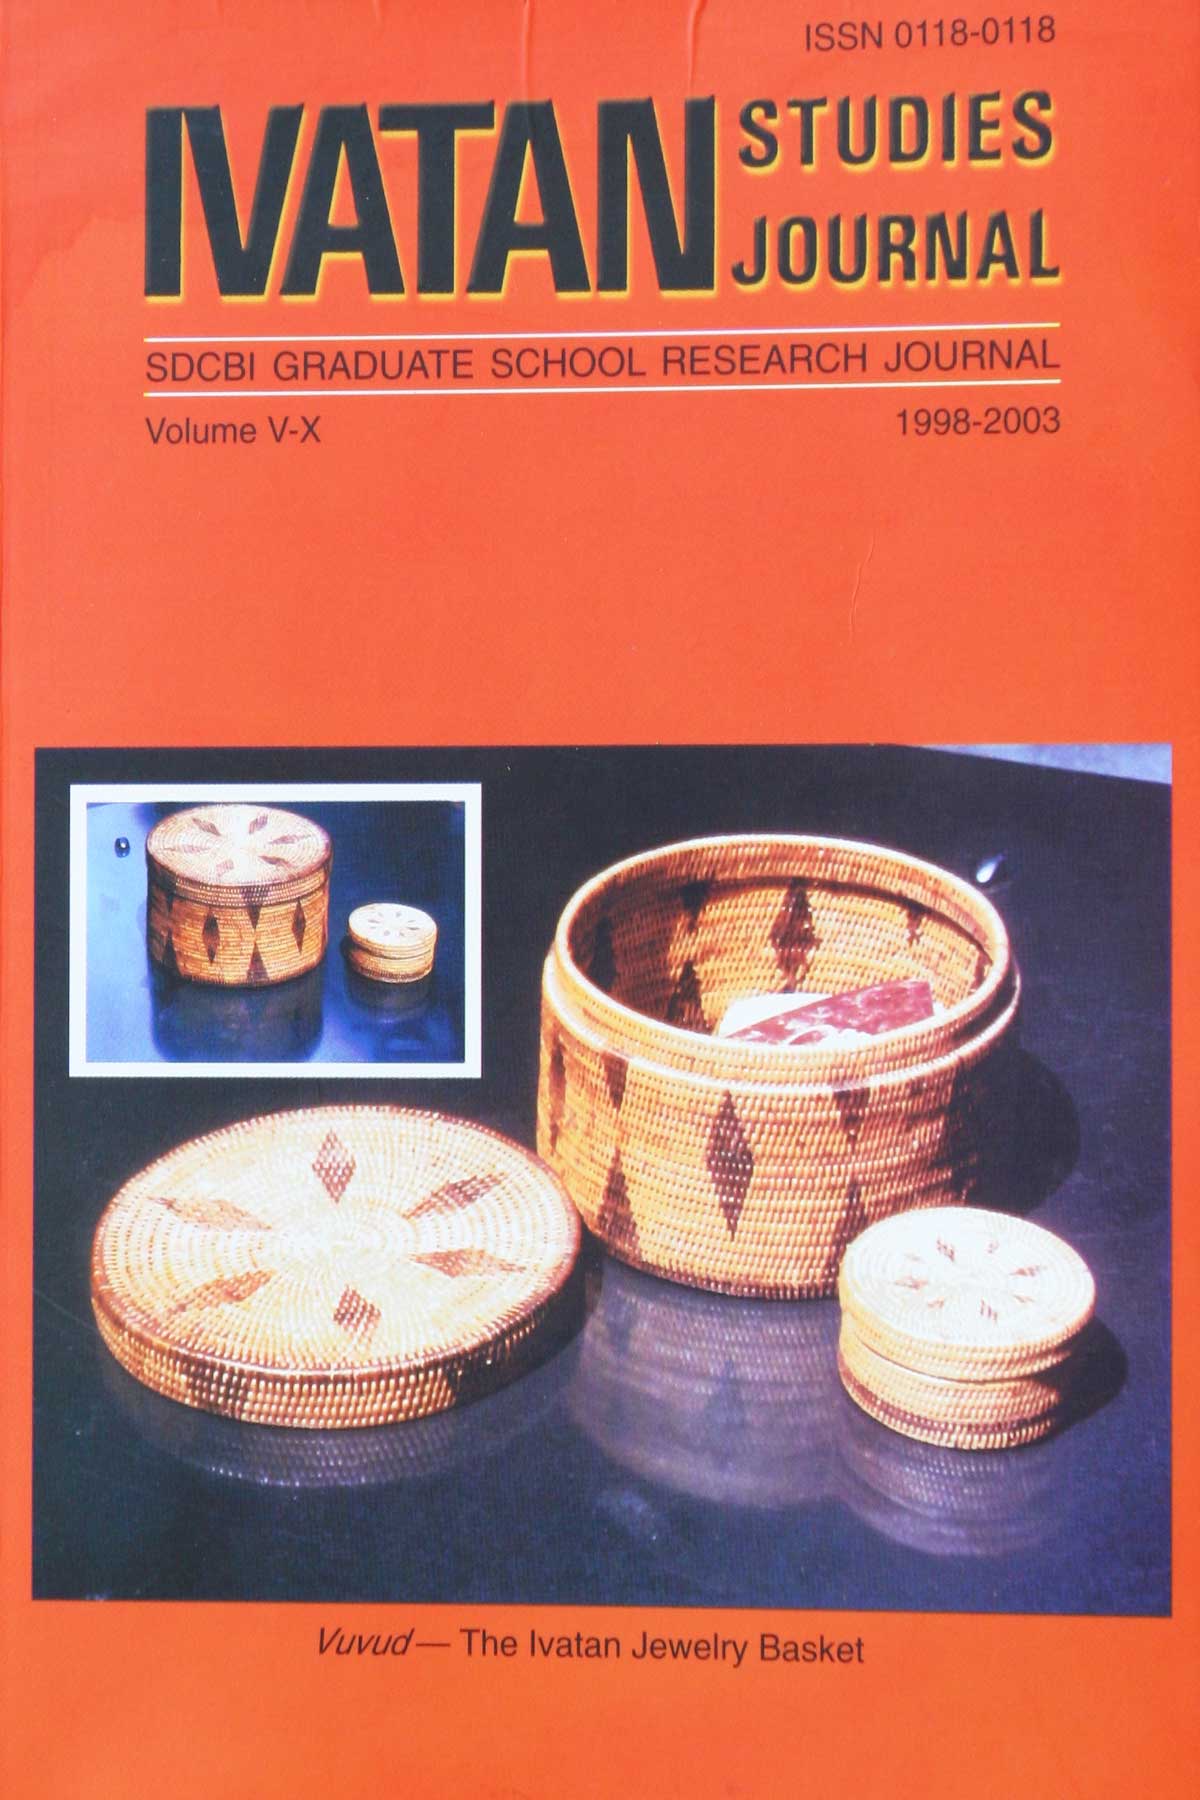 Ivatan Studies Journal - Graduate School Research Journal - Photo Dr Steven A Martin - Basco Batanes Philippines 2006